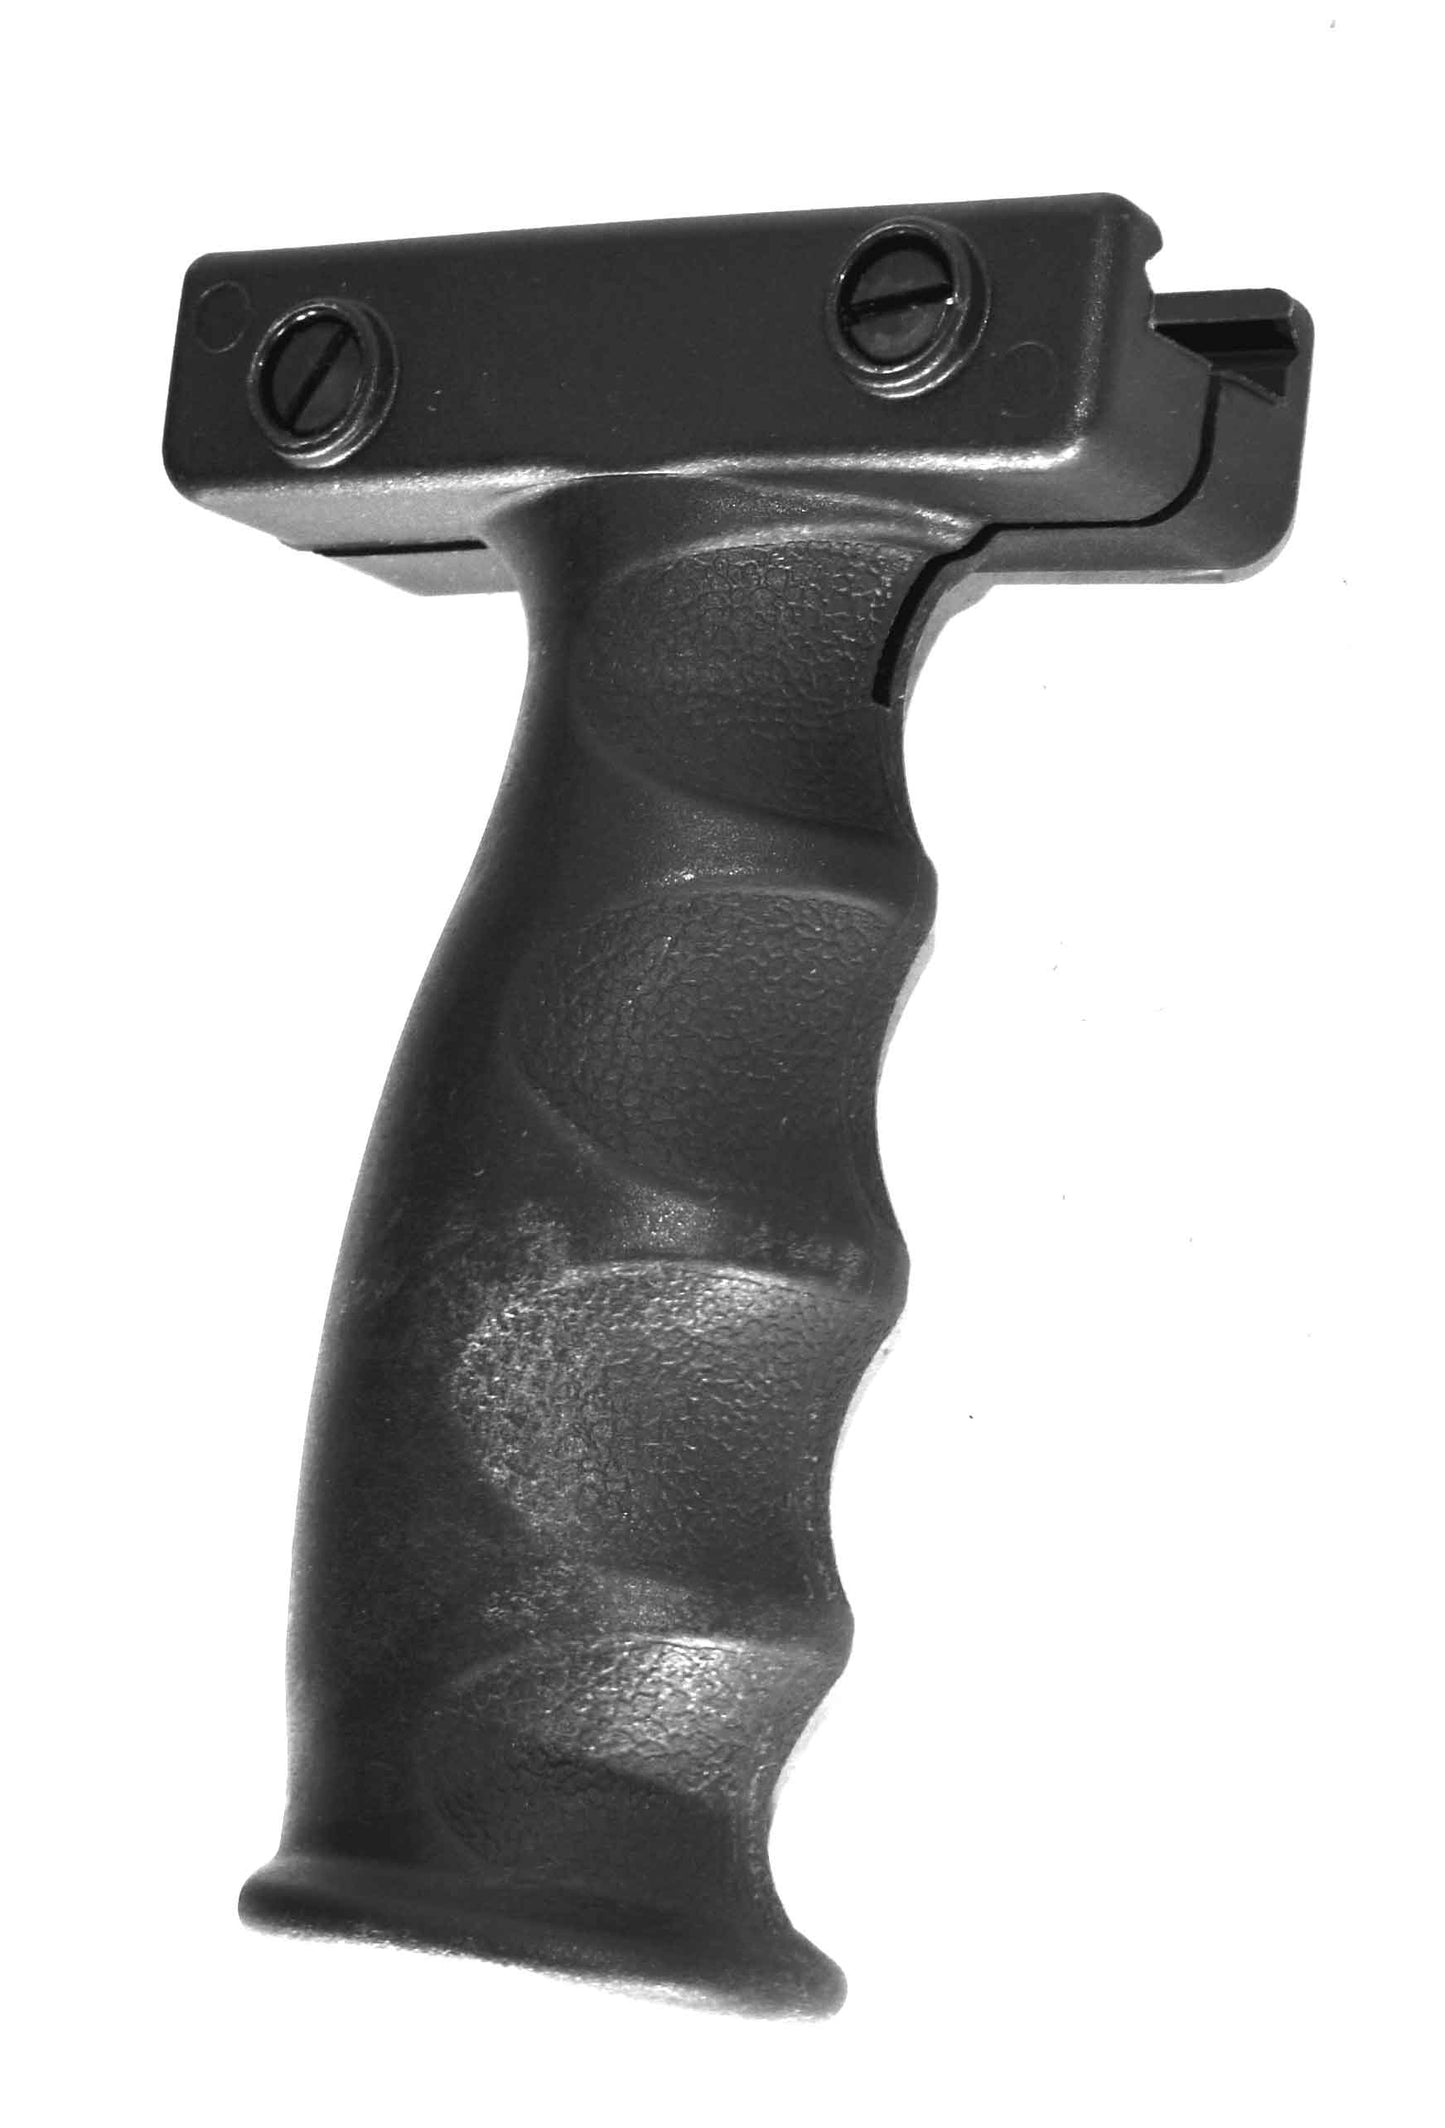 picatinny style grip black for rifles and shotguns.